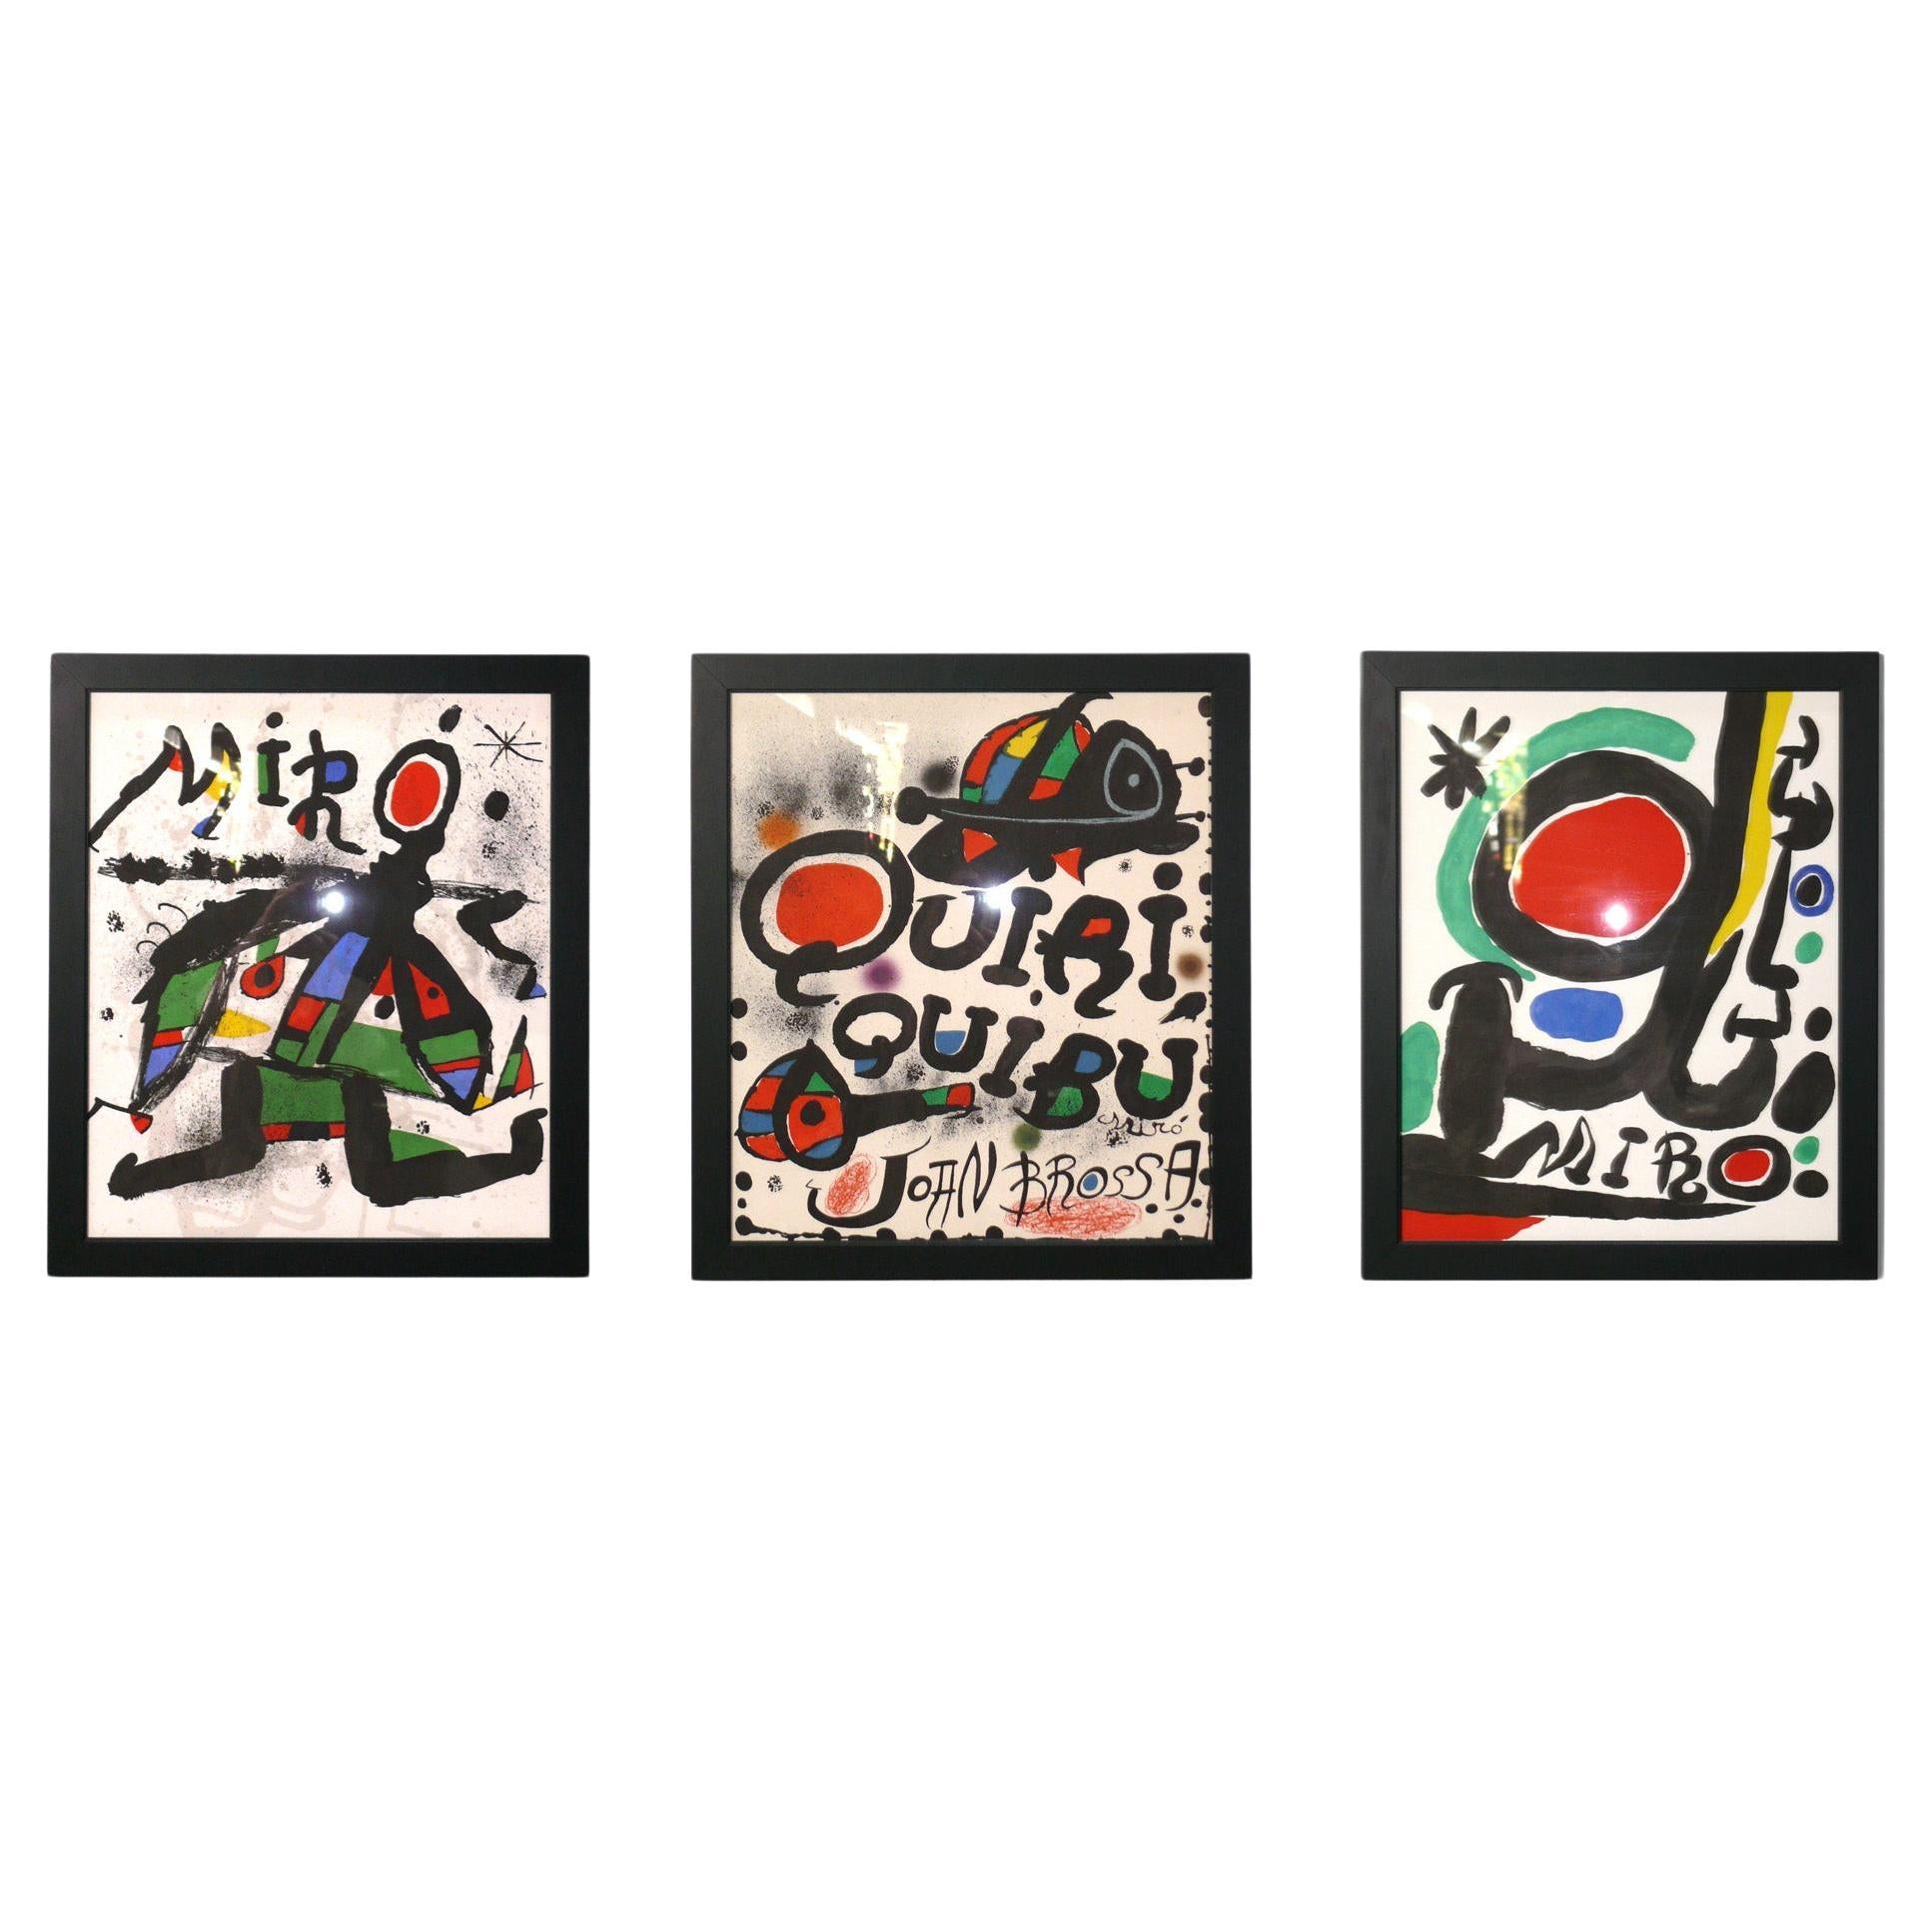 Large Scale Joan Miro Screenprints in Vibrant Colors